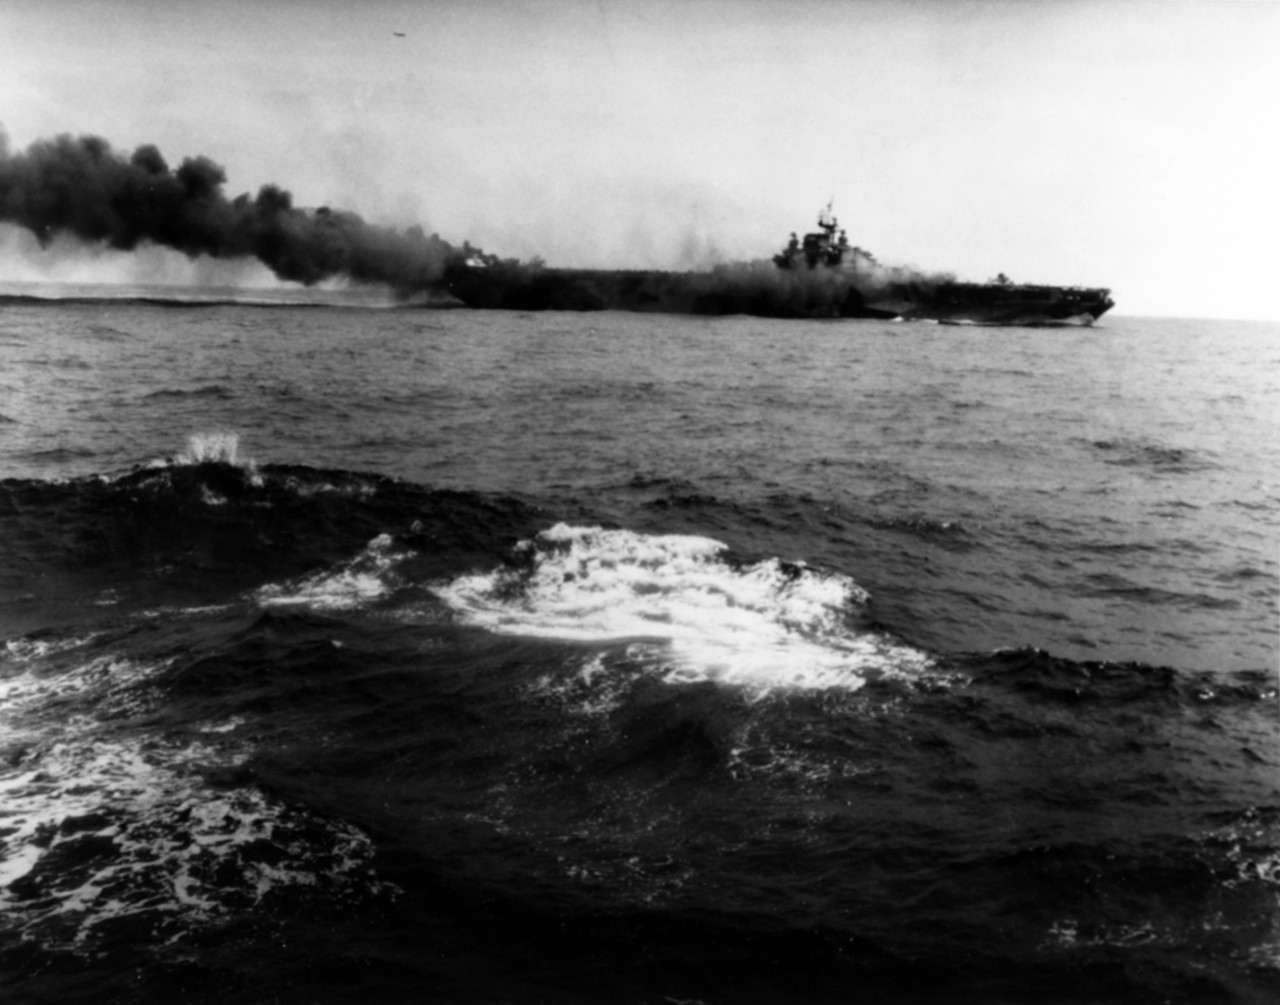 Okinawa Campaign, 1945